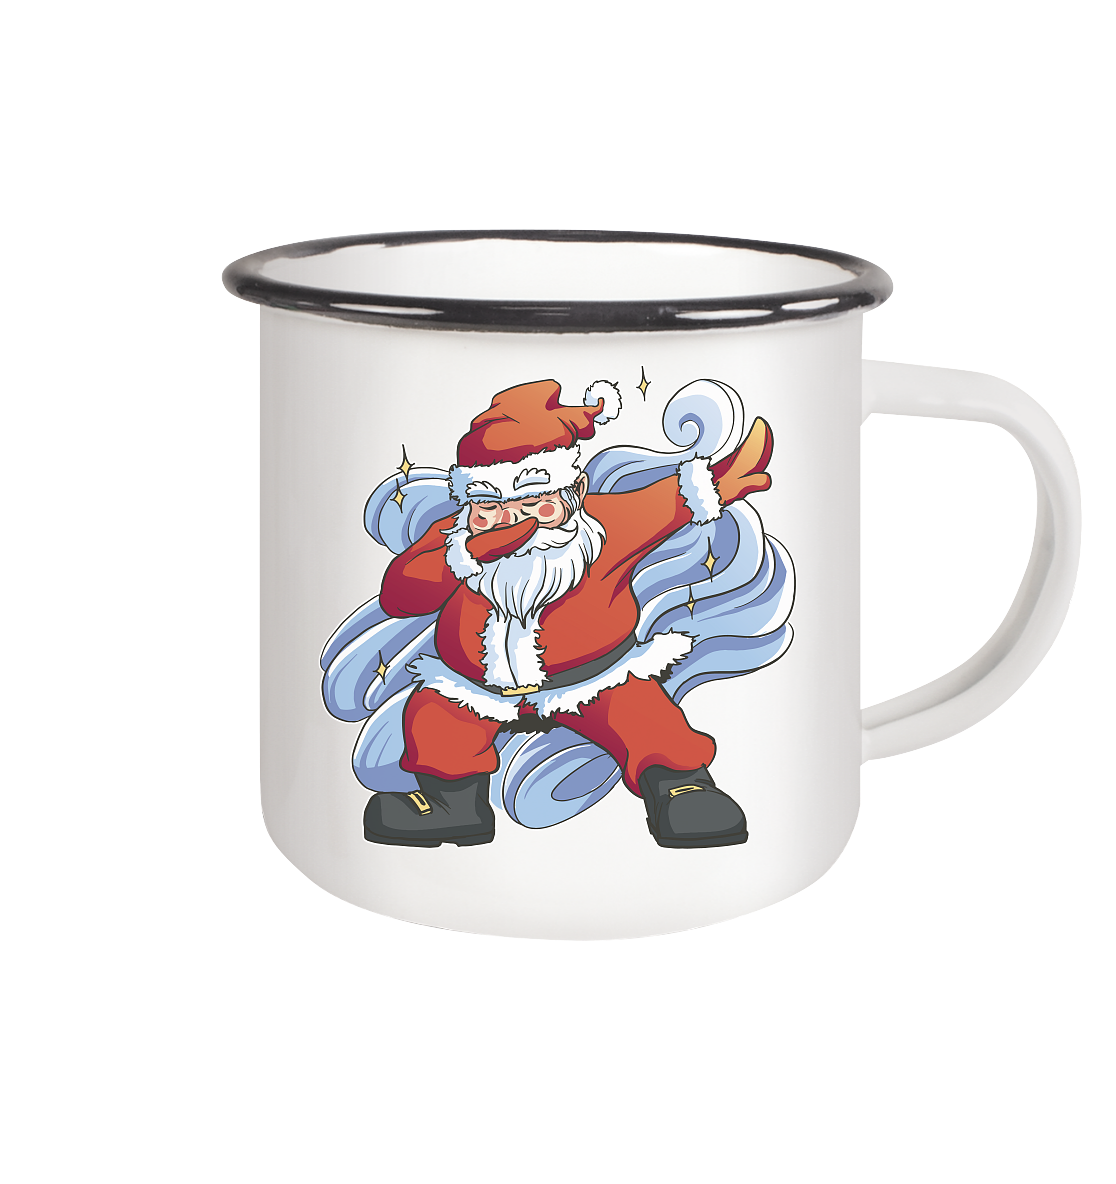 Christmas, Santa Claus Dabbing, Dancing Santa Claus, Fun, Santa Dabbing Christmas - Enamel Mug (Black)